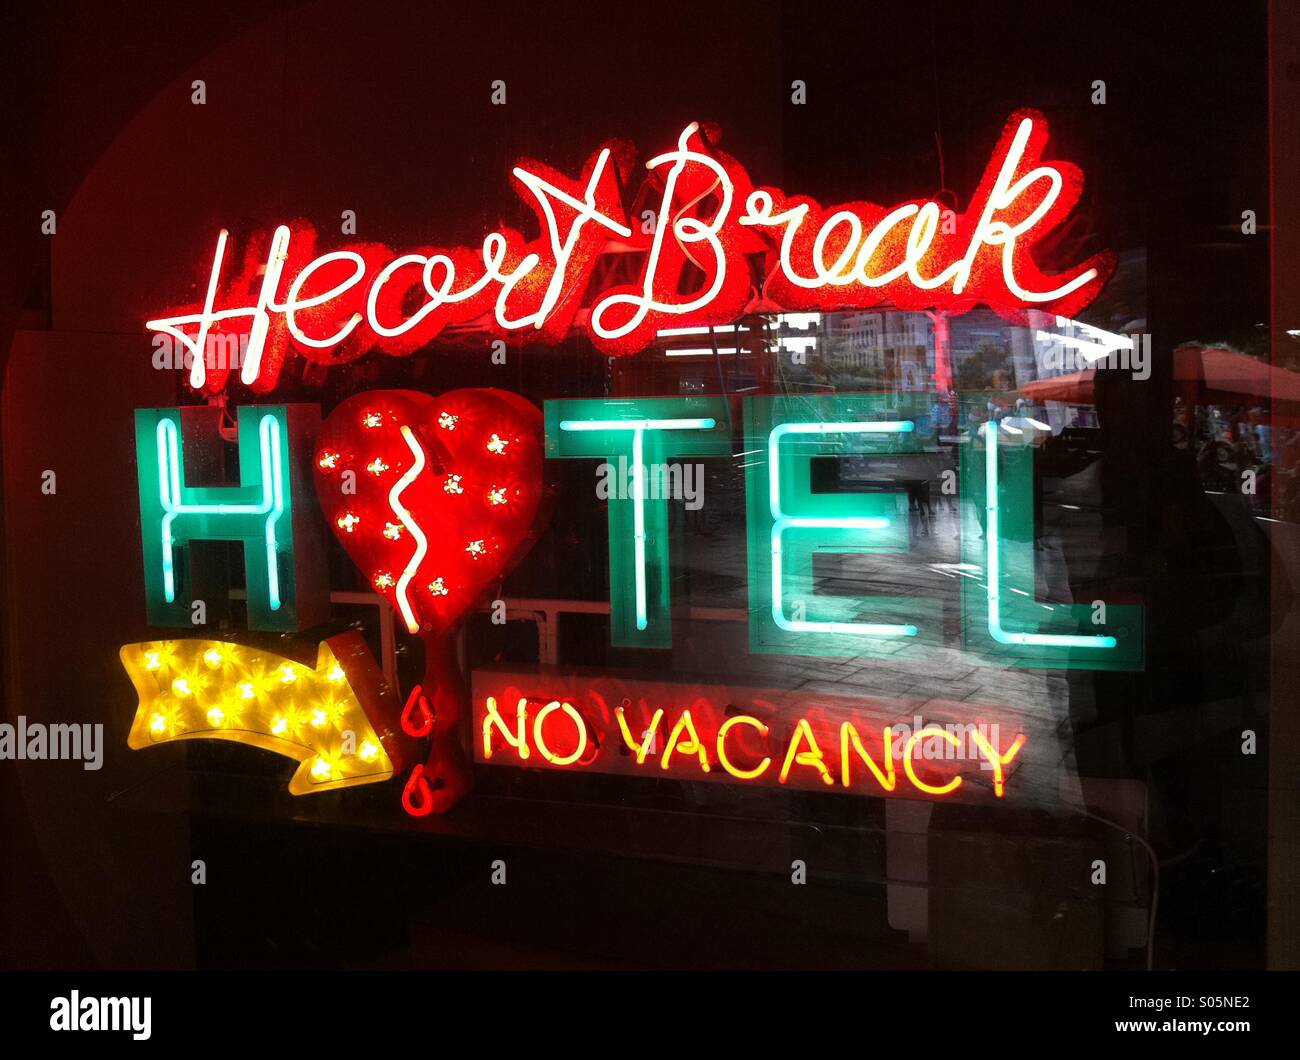 Heartbreak hotel neon sign, Southbank, London, UK Stock Photo